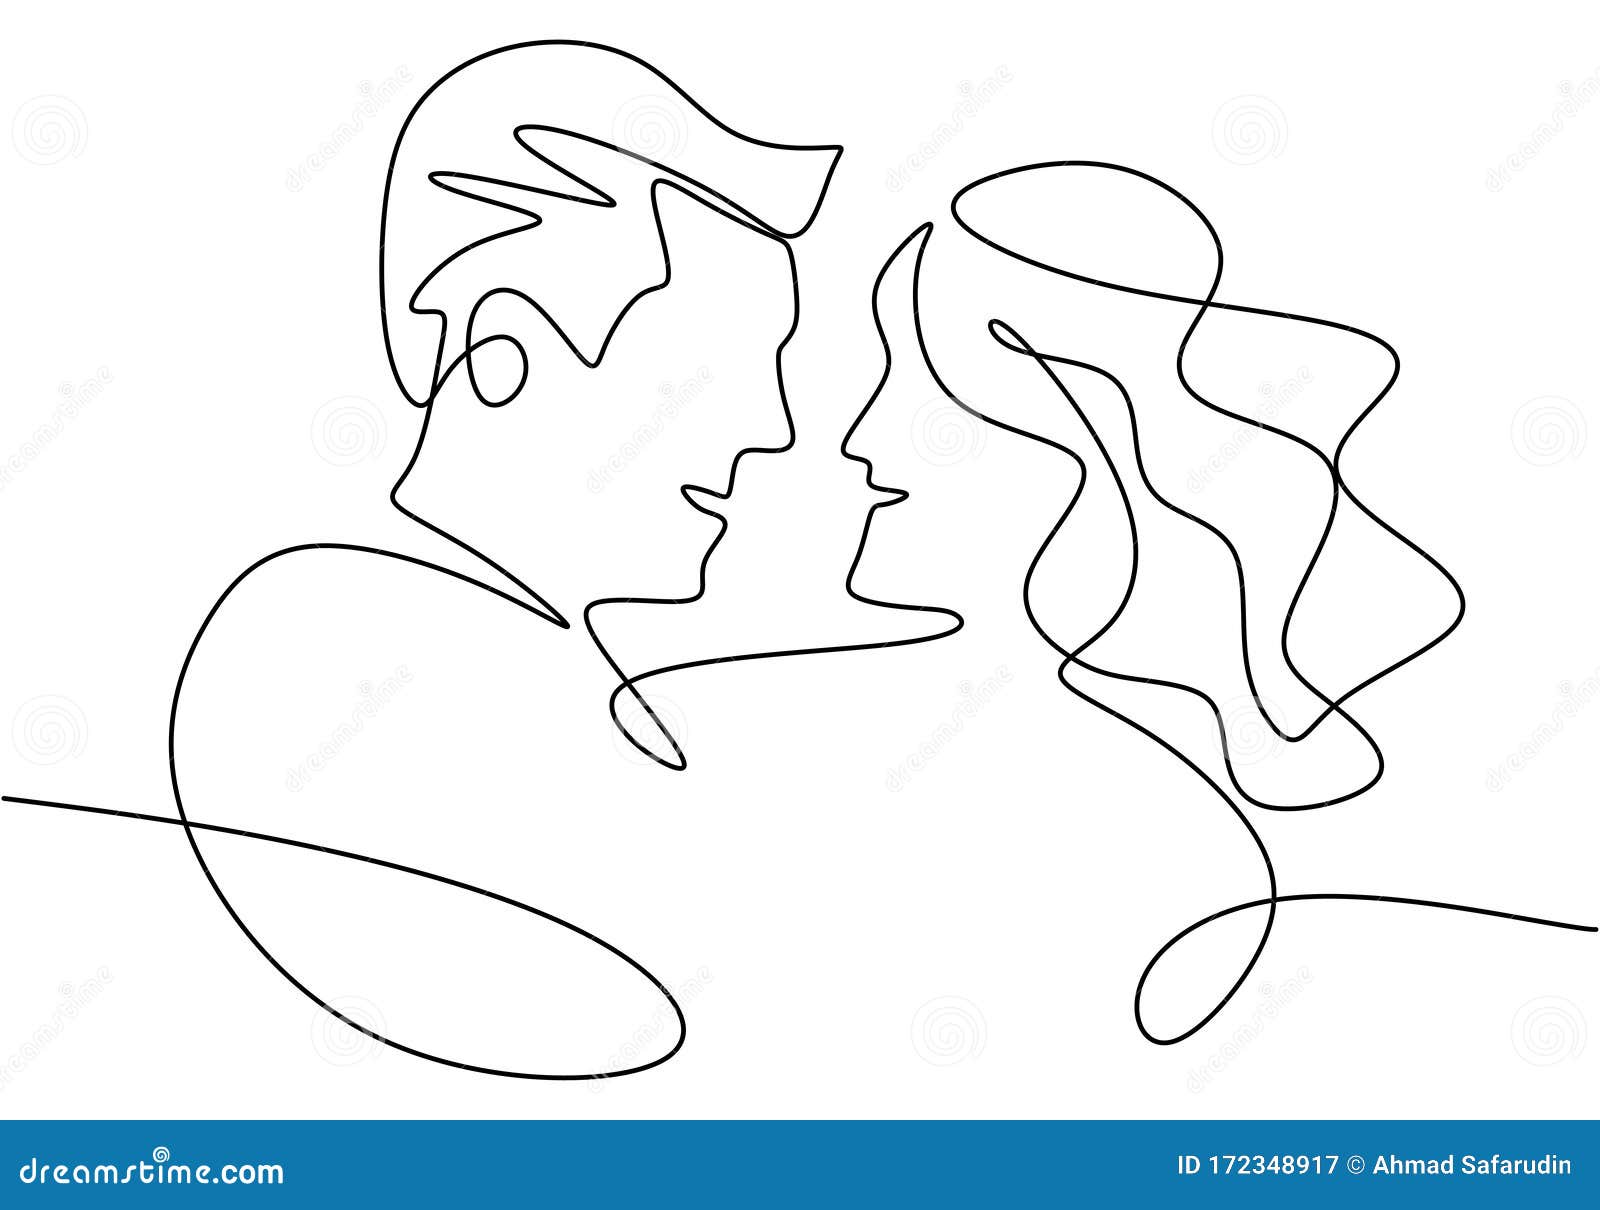 Romantic Couple, Sketch Art Love Illustration, Love Sketch, Couple In Love  Hand Drawn Sketch #1 Beach Towel, romantic drawing - designco-india.com